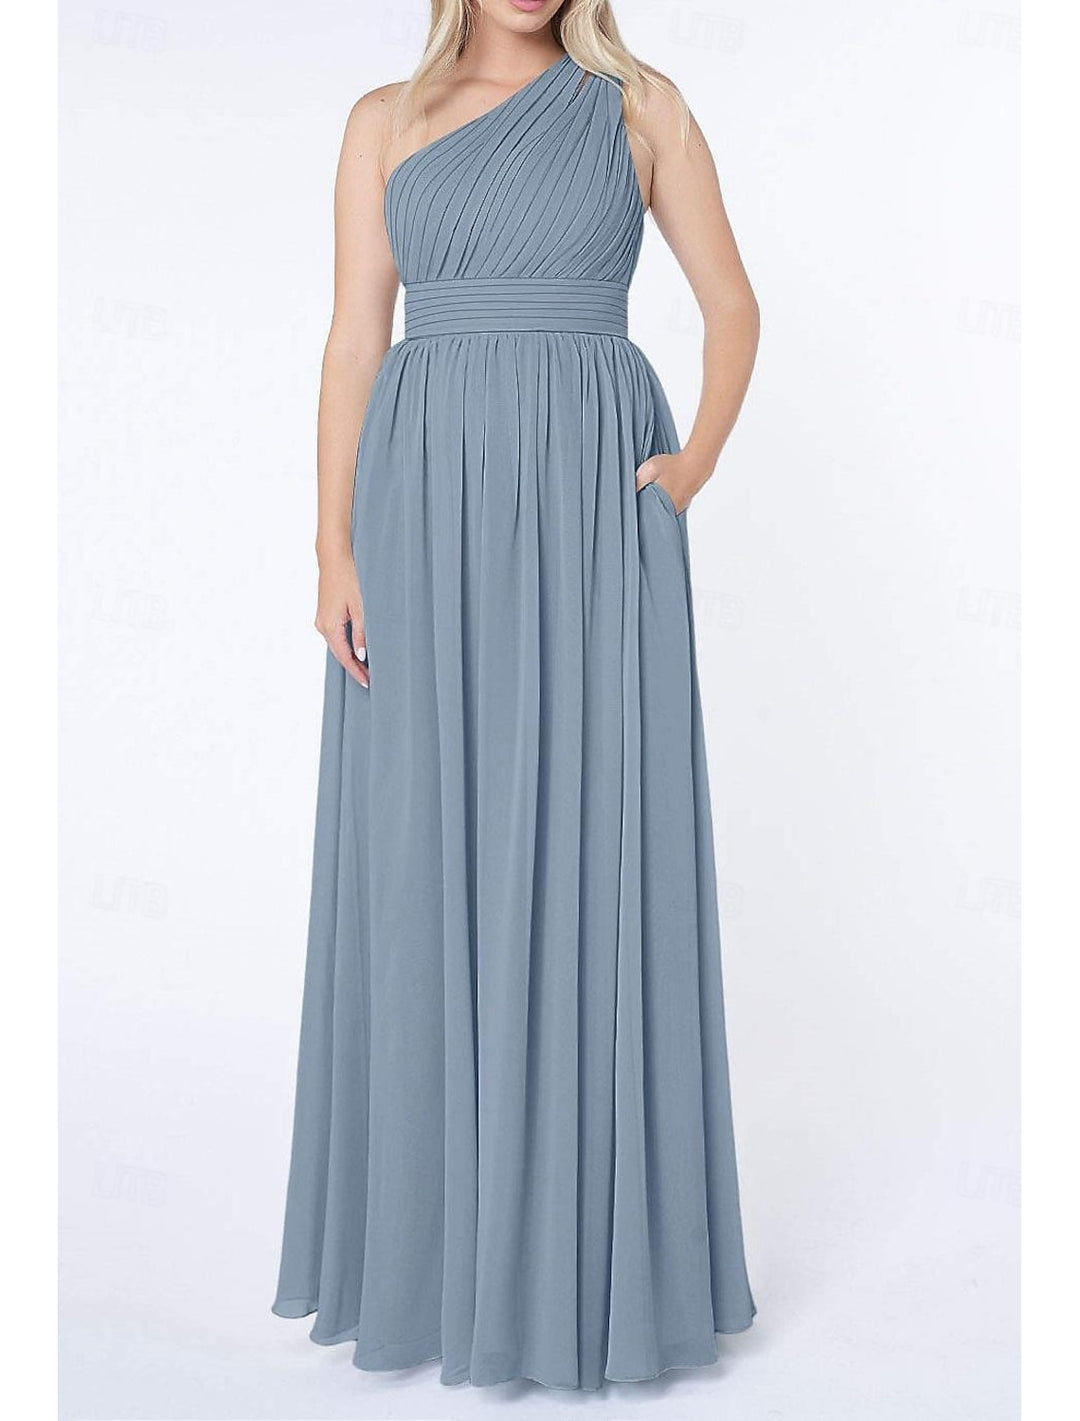 A Line/Princess One Shoulder Sleeveless Floor-Length Wedding Guest Dress